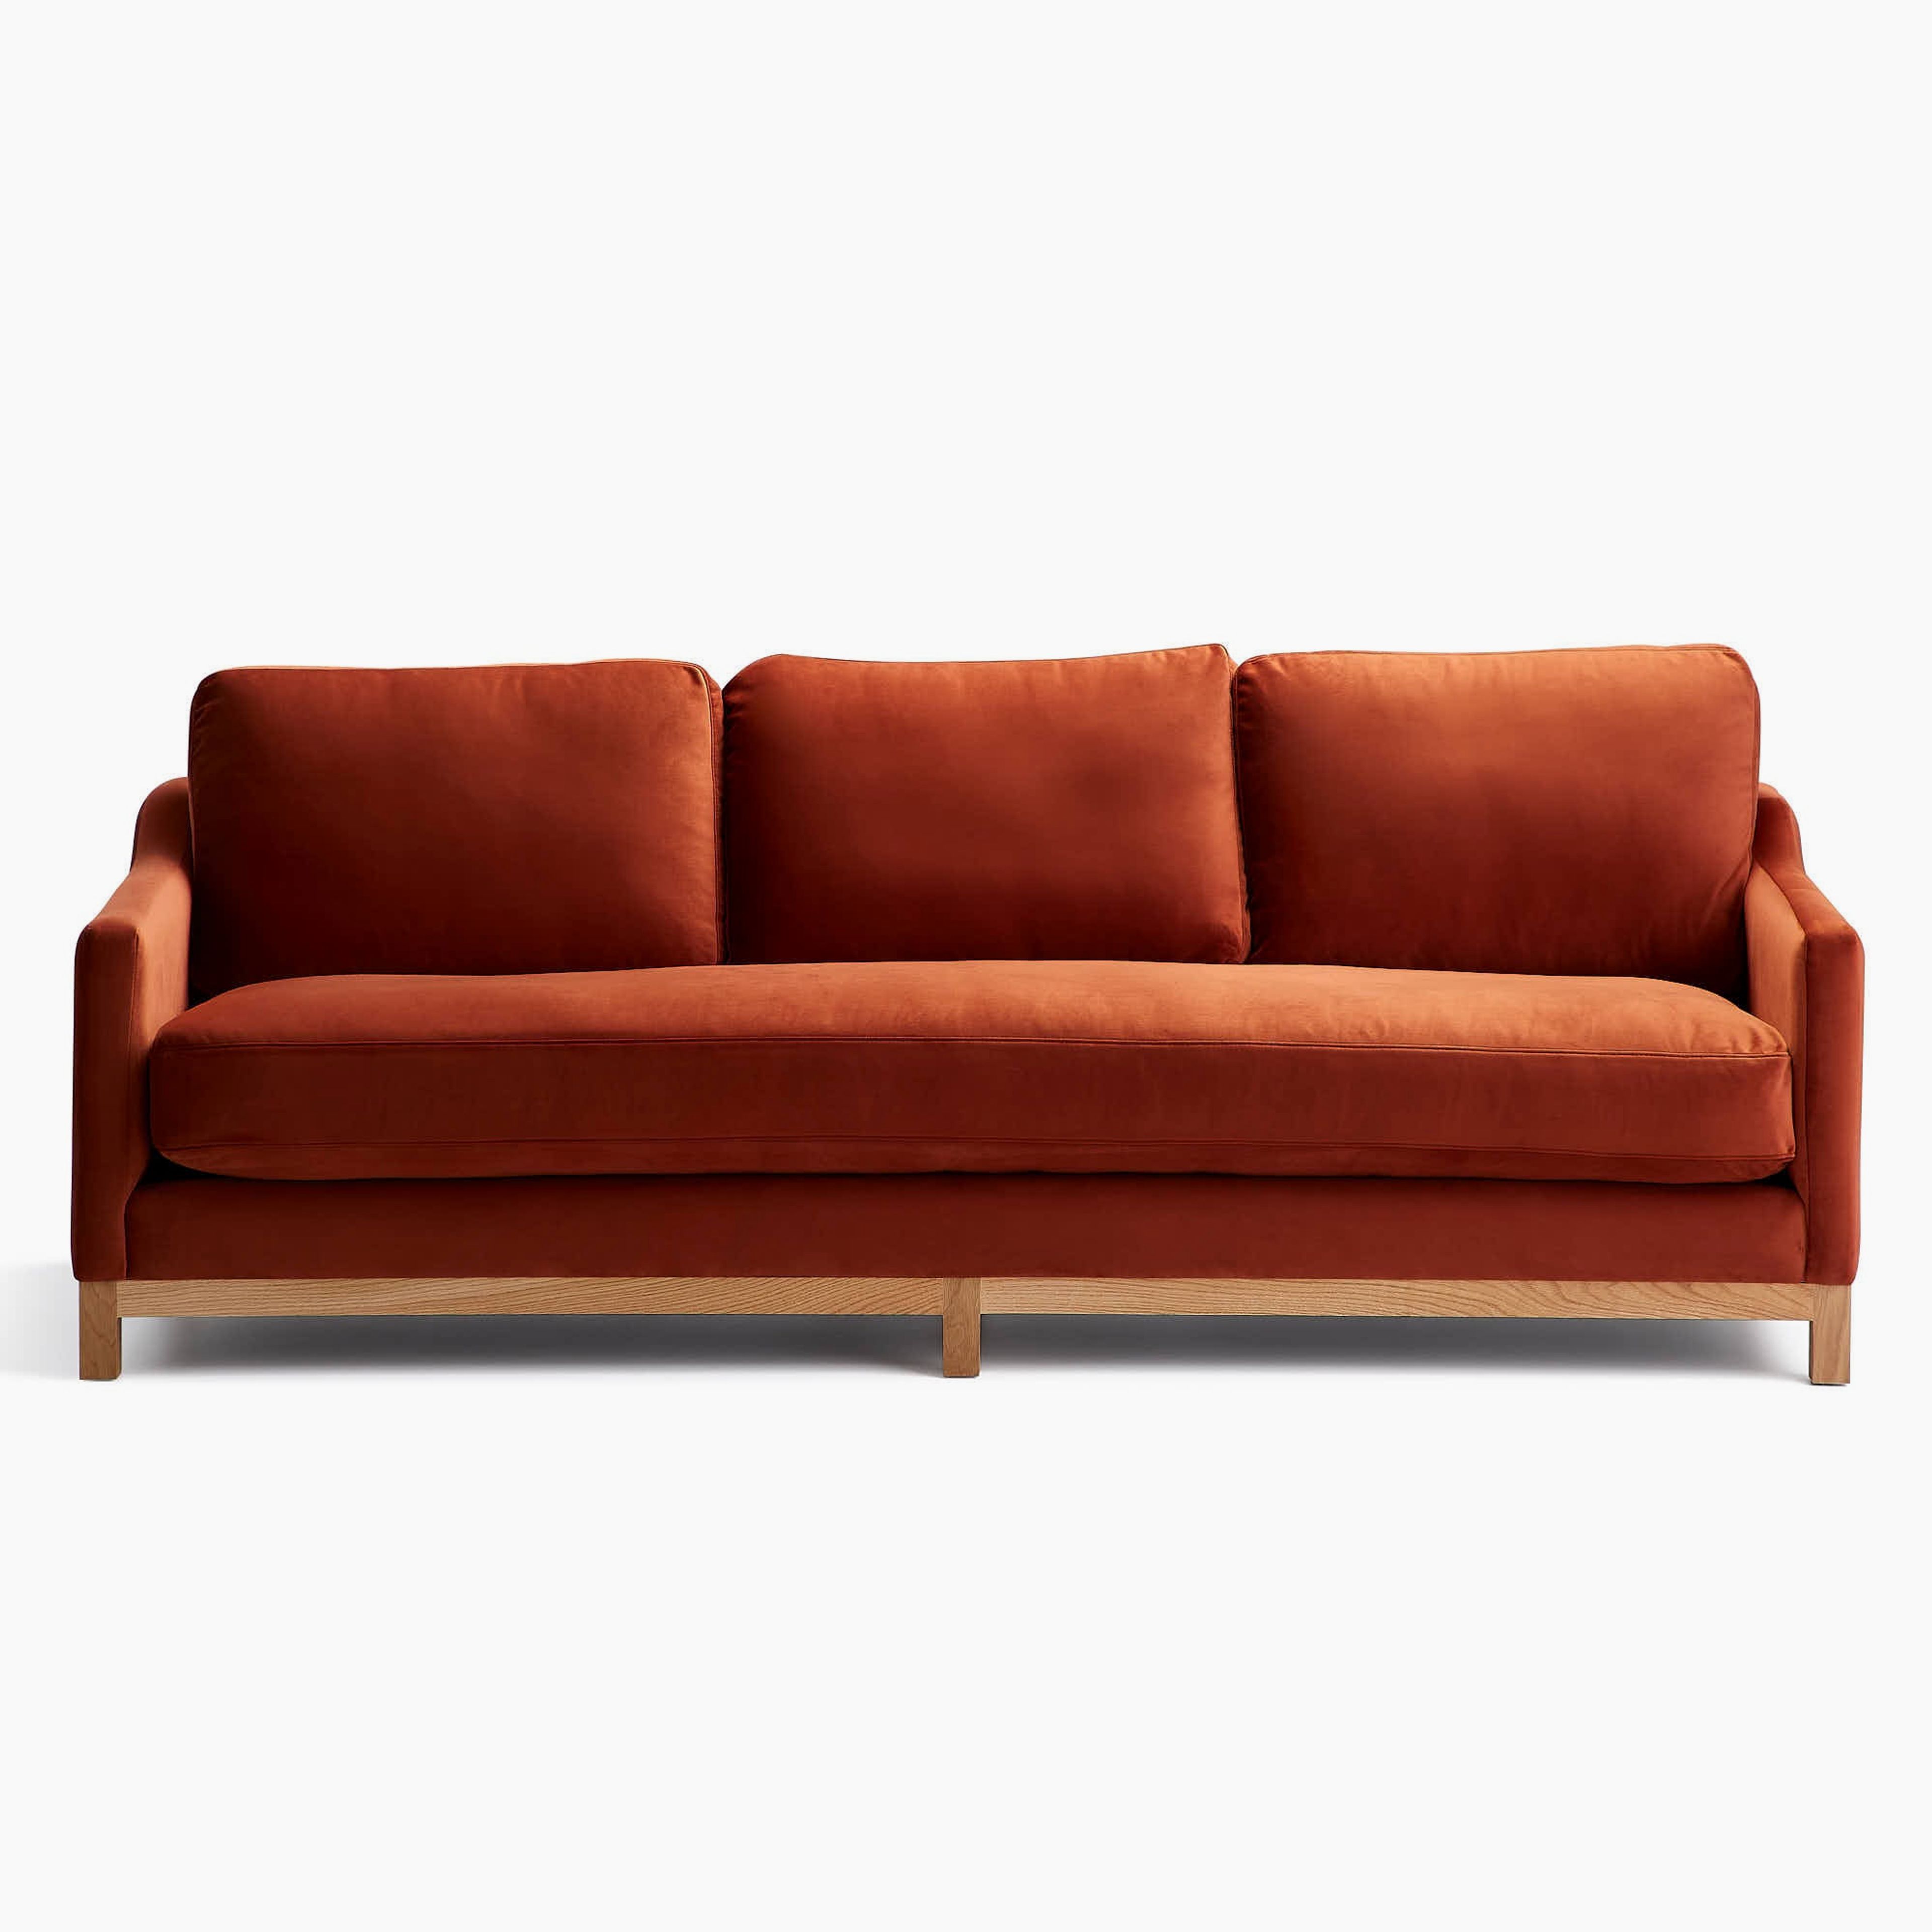 Caprice Sofa